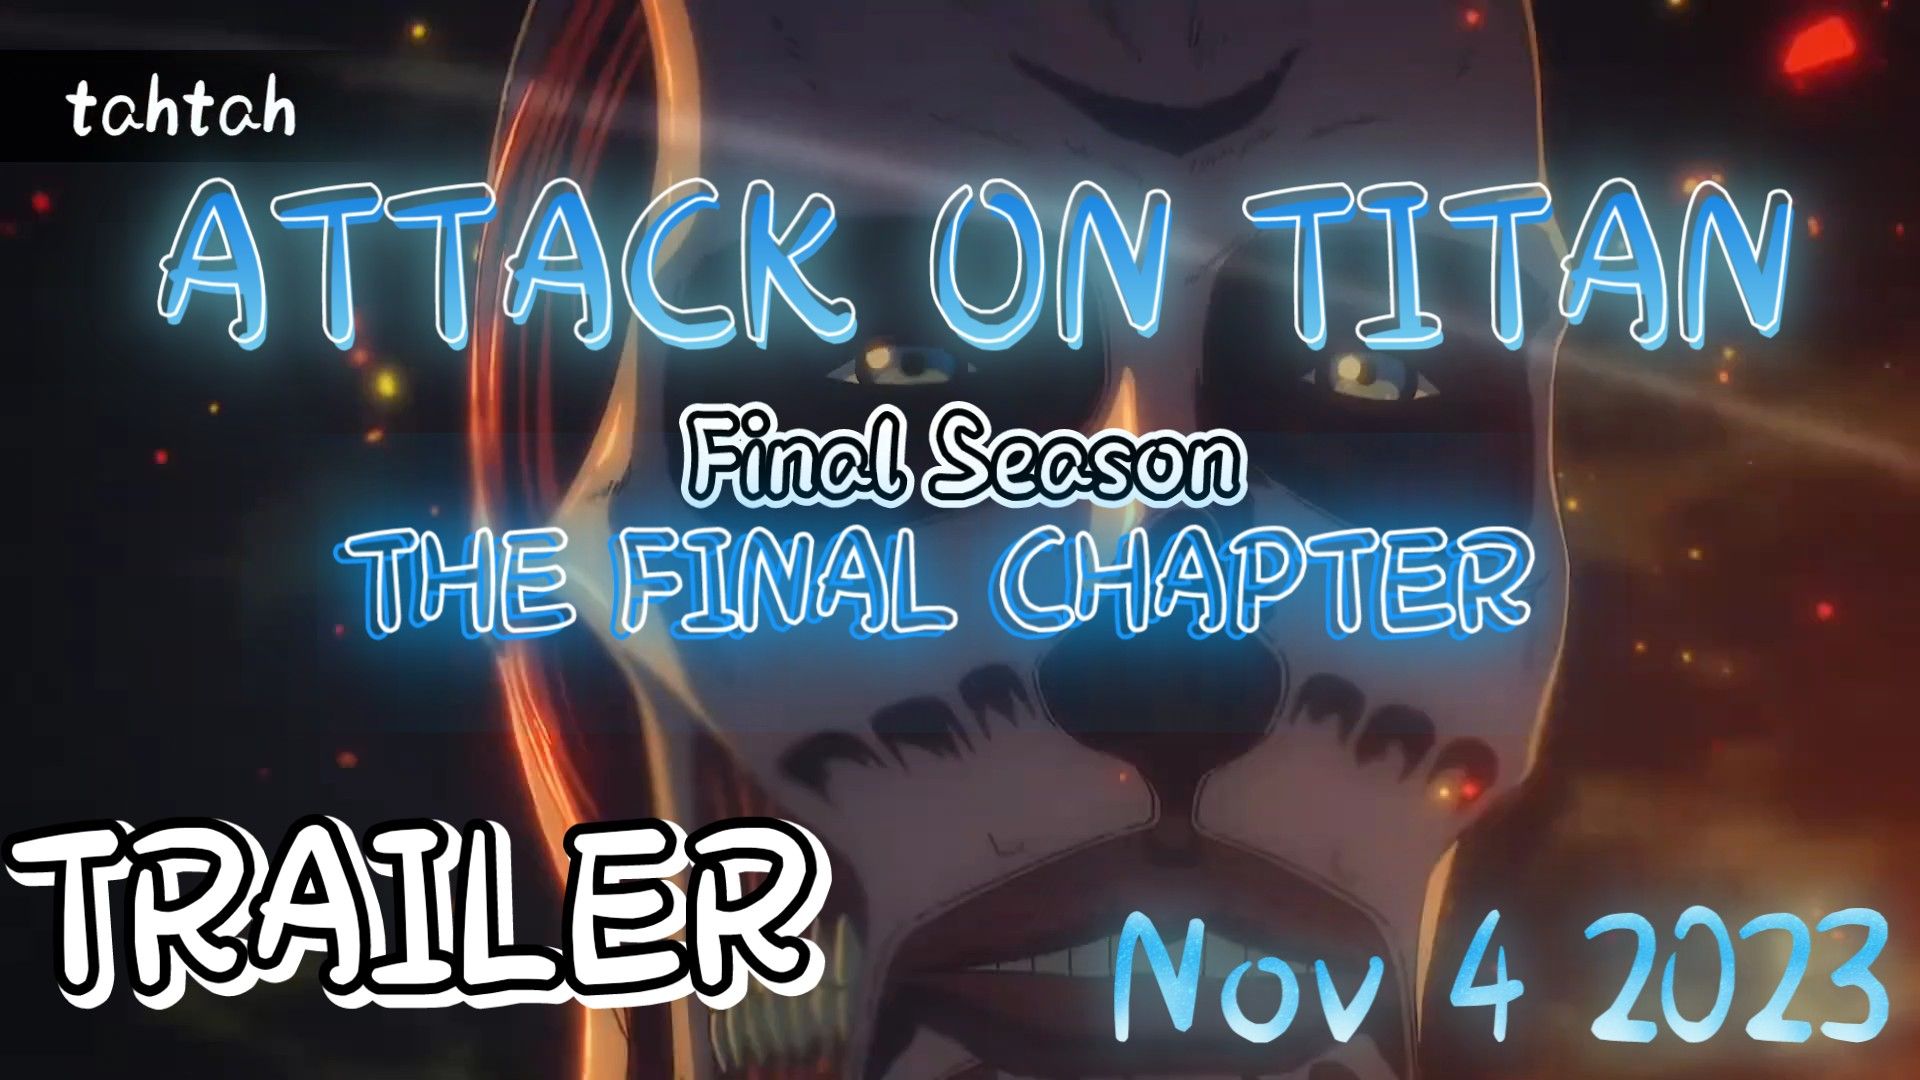 Attack on Titan Season 4 The Final Season Complete Episodes 1-28